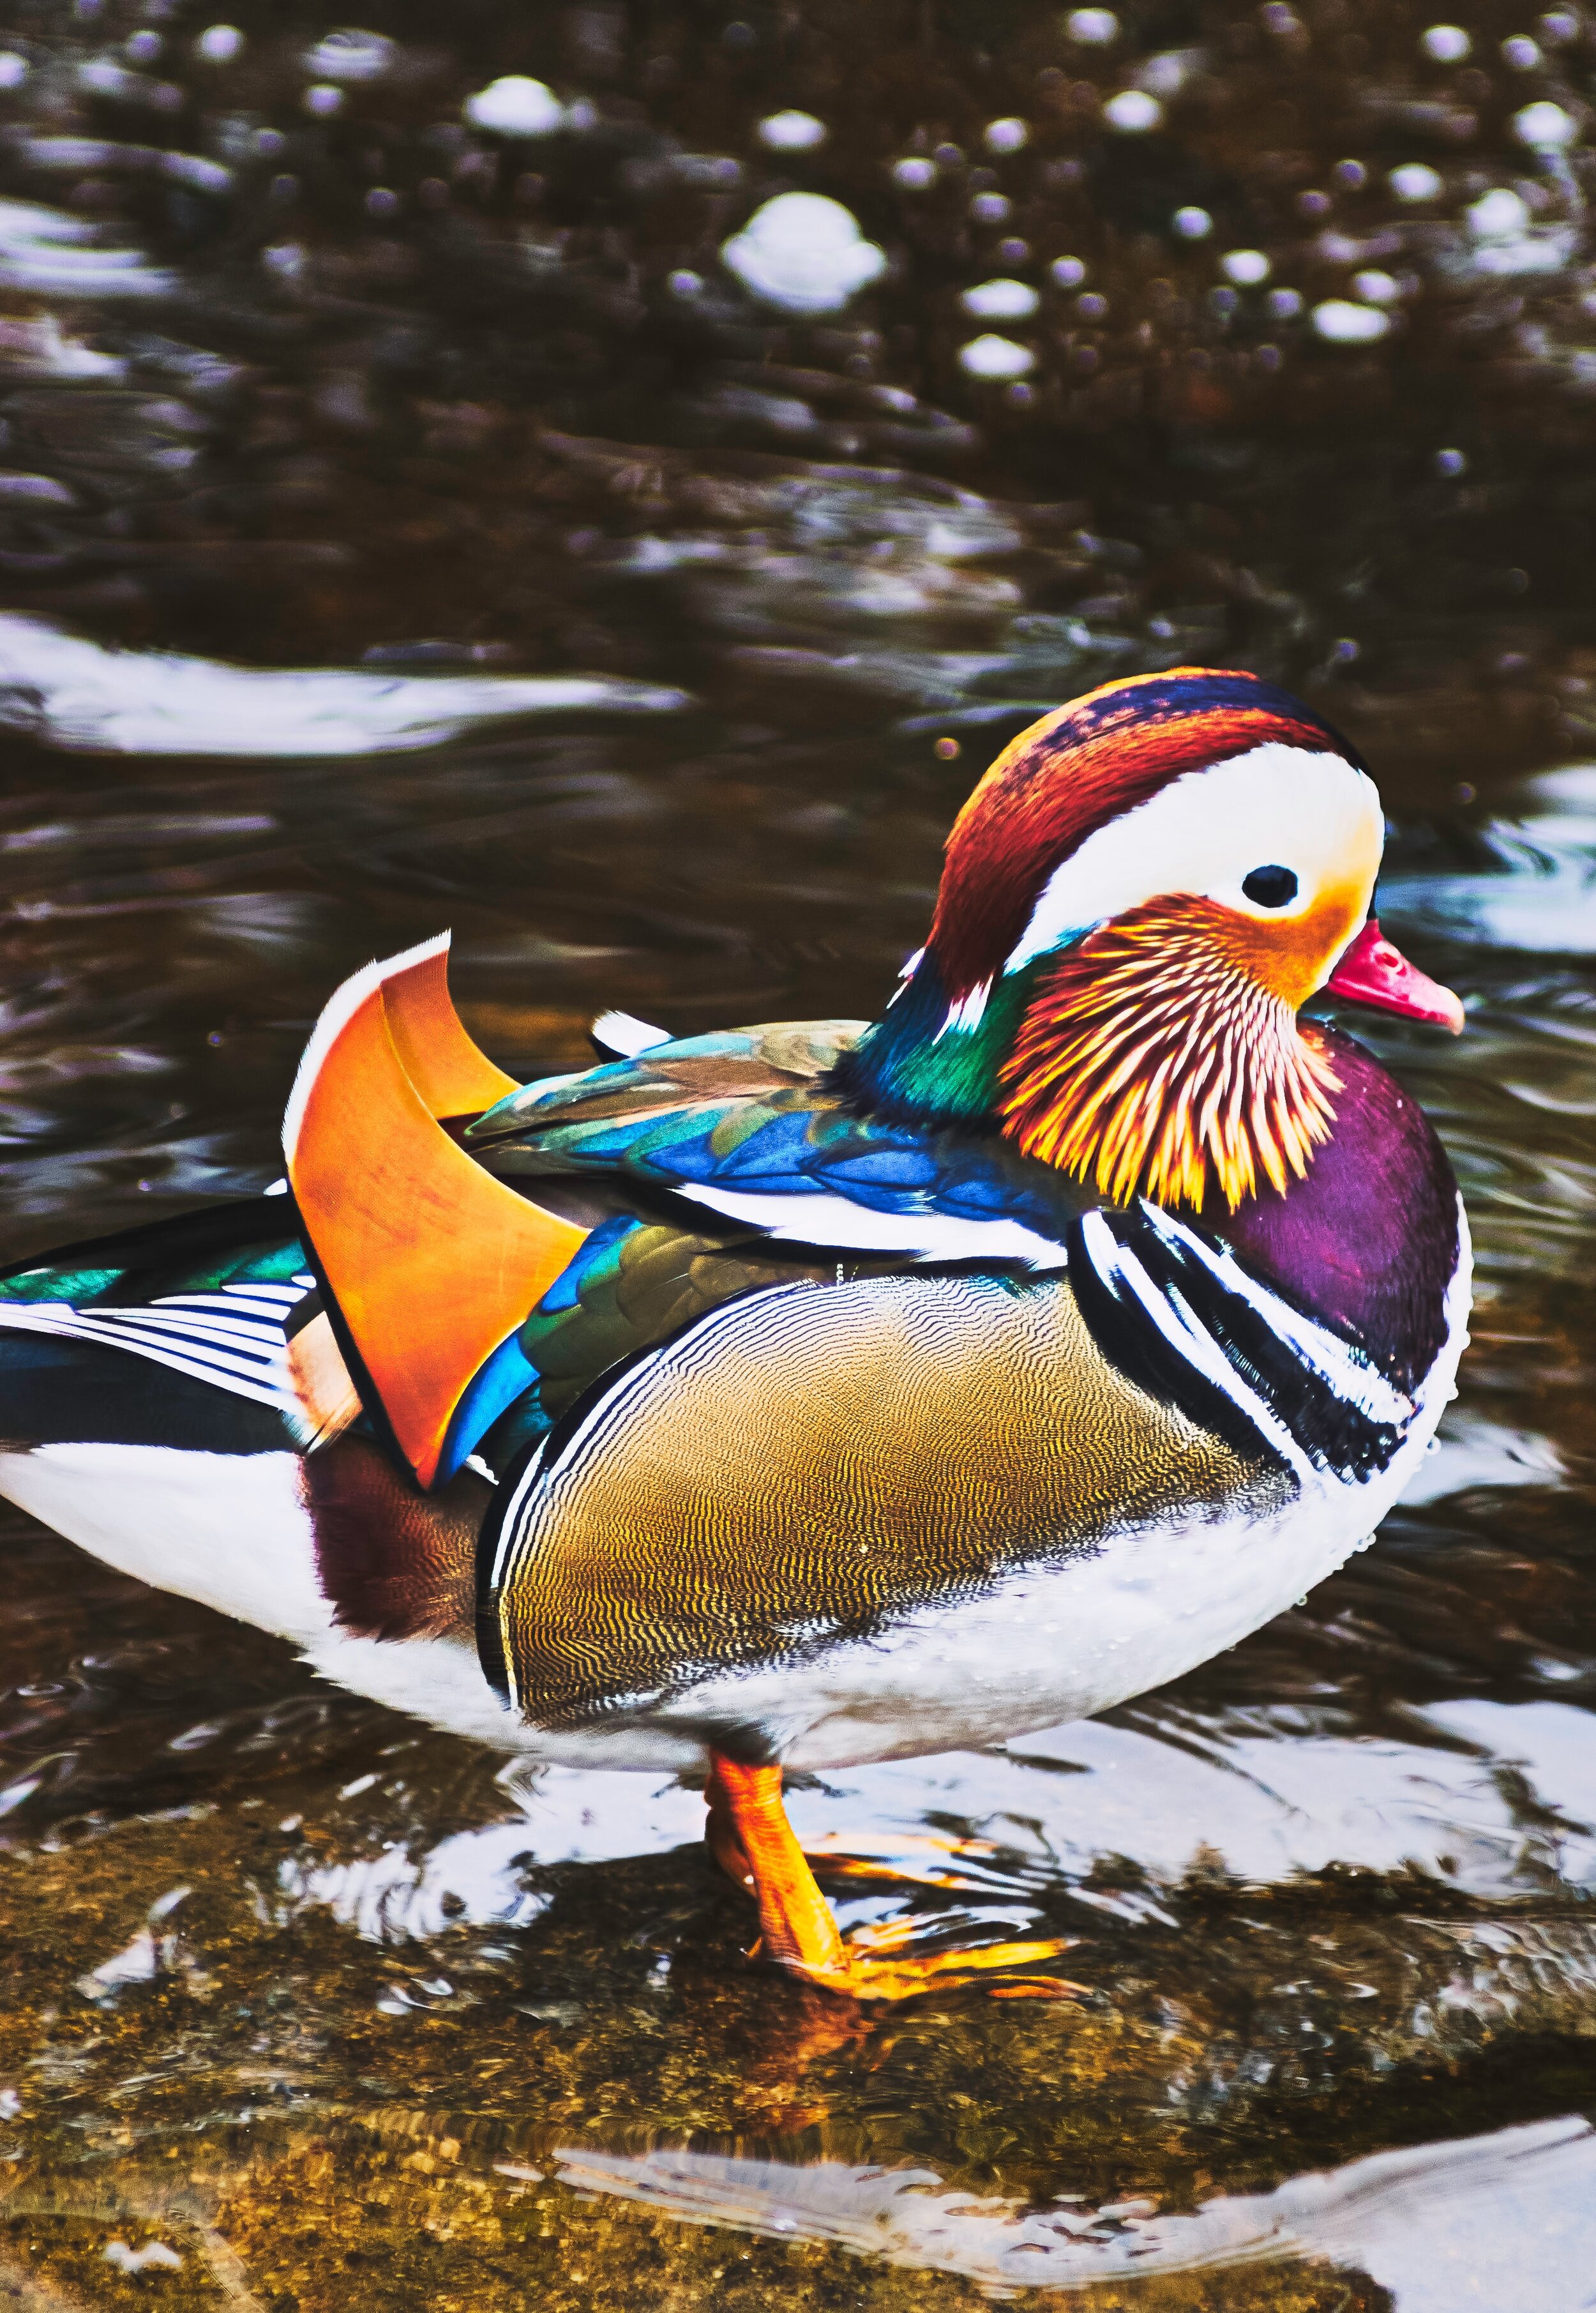 Mandarin ducks: The meaning behind the popular pair — F O R M F L U E N T